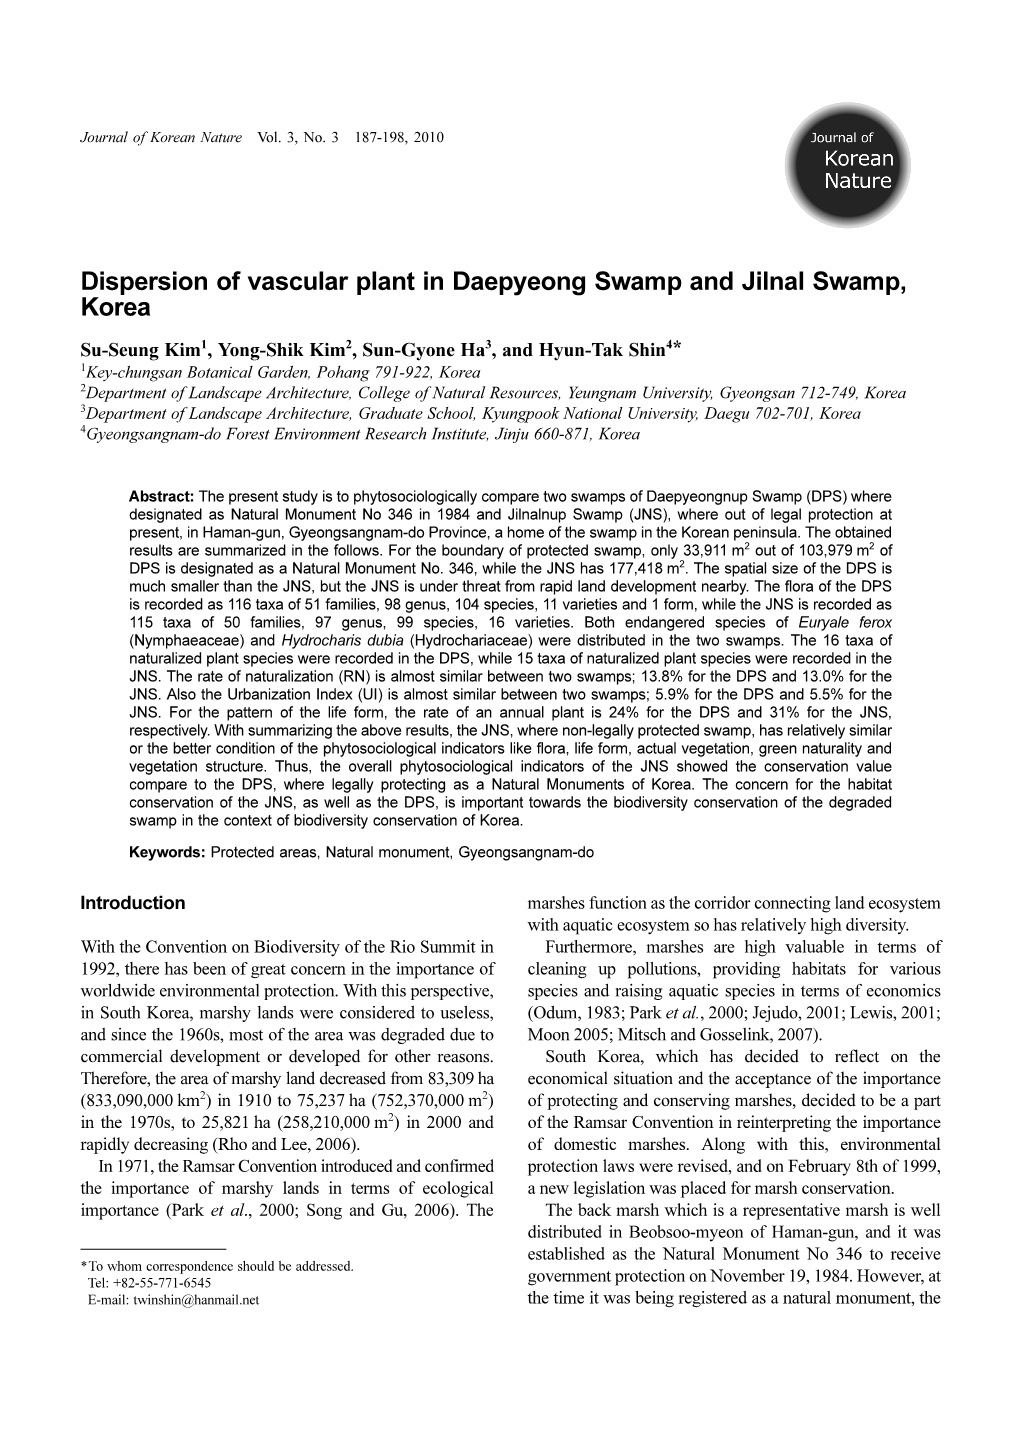 Dispersion of Vascular Plant in Daepyeong Swamp and Jilnal Swamp, Korea